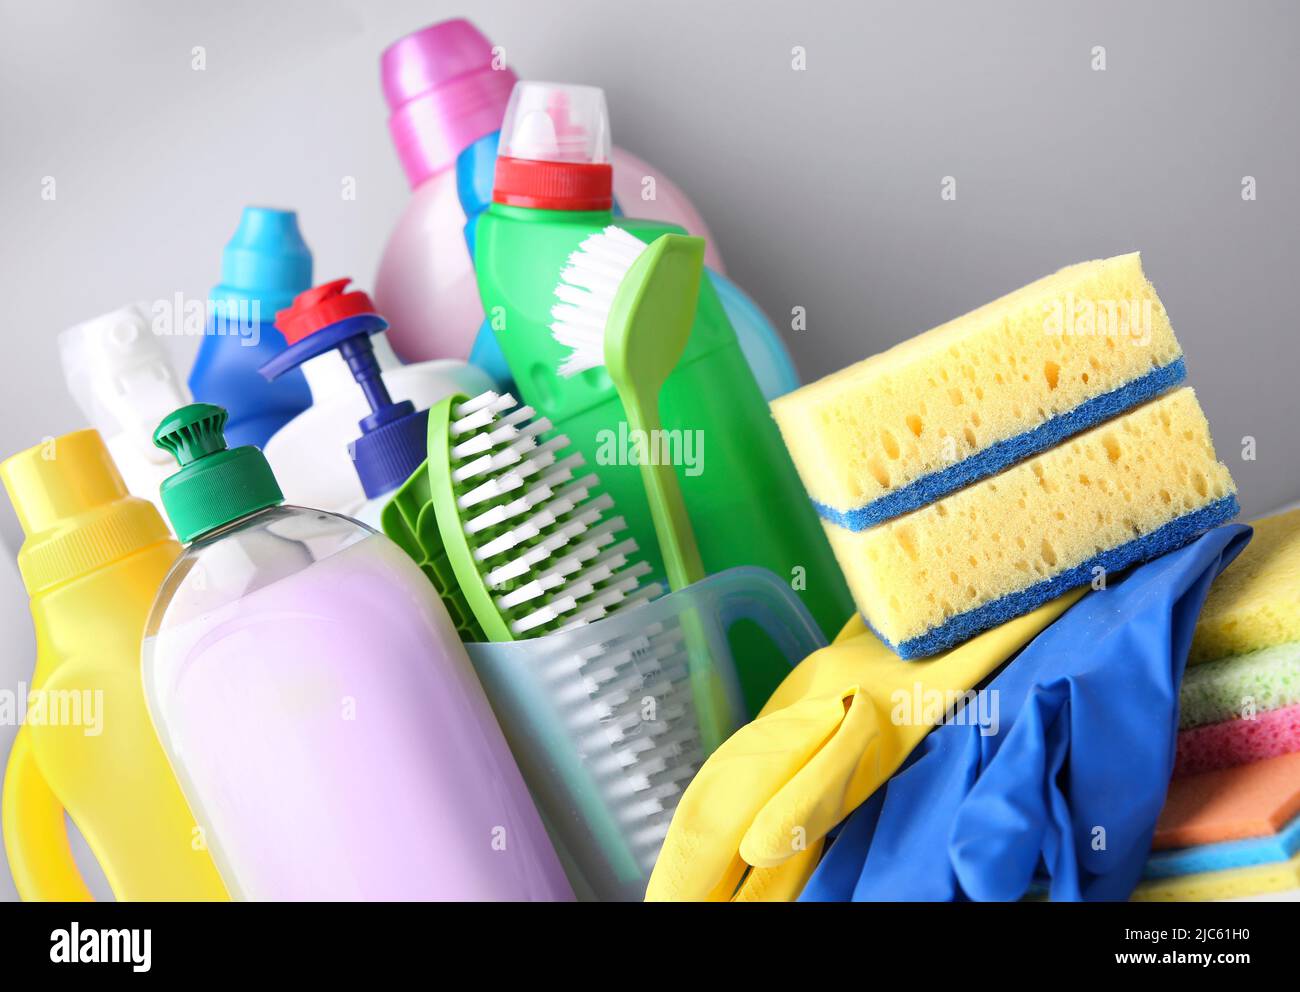 https://c8.alamy.com/comp/2JC61H0/plastic-domestic-desinfectant-bottles-and-sprayshousehold-itemshousekeeping-object-closeup-2JC61H0.jpg